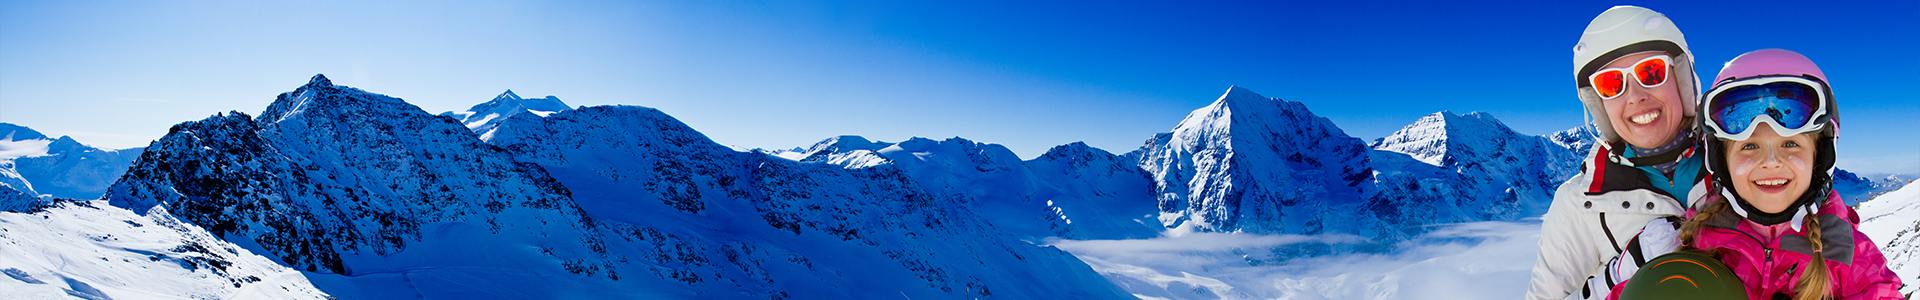 Winterurlaub Familie Ski Panorama